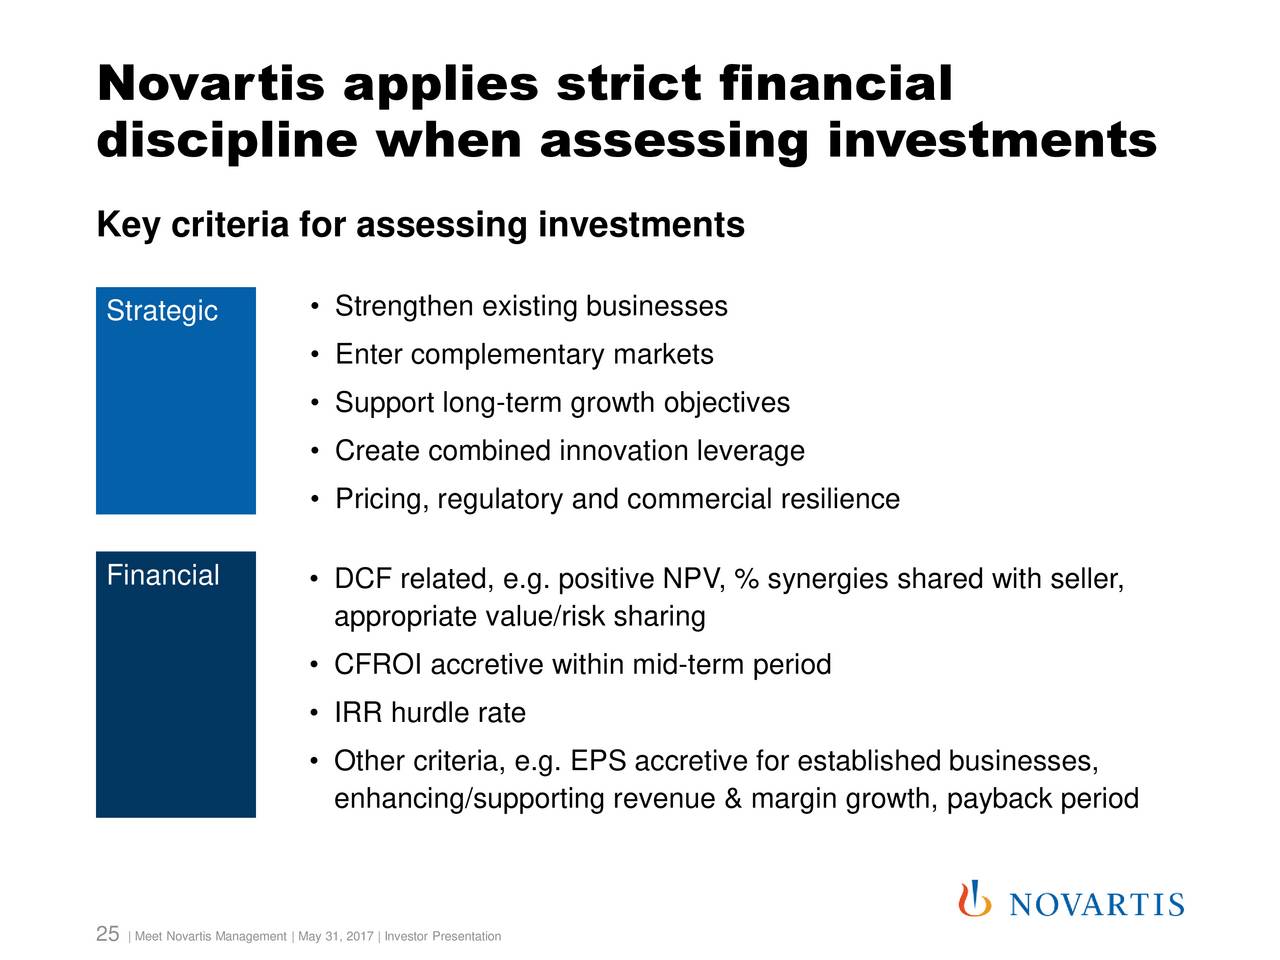 Novartis AG (NVS) Investor Presentation Slideshow (NYSENVS